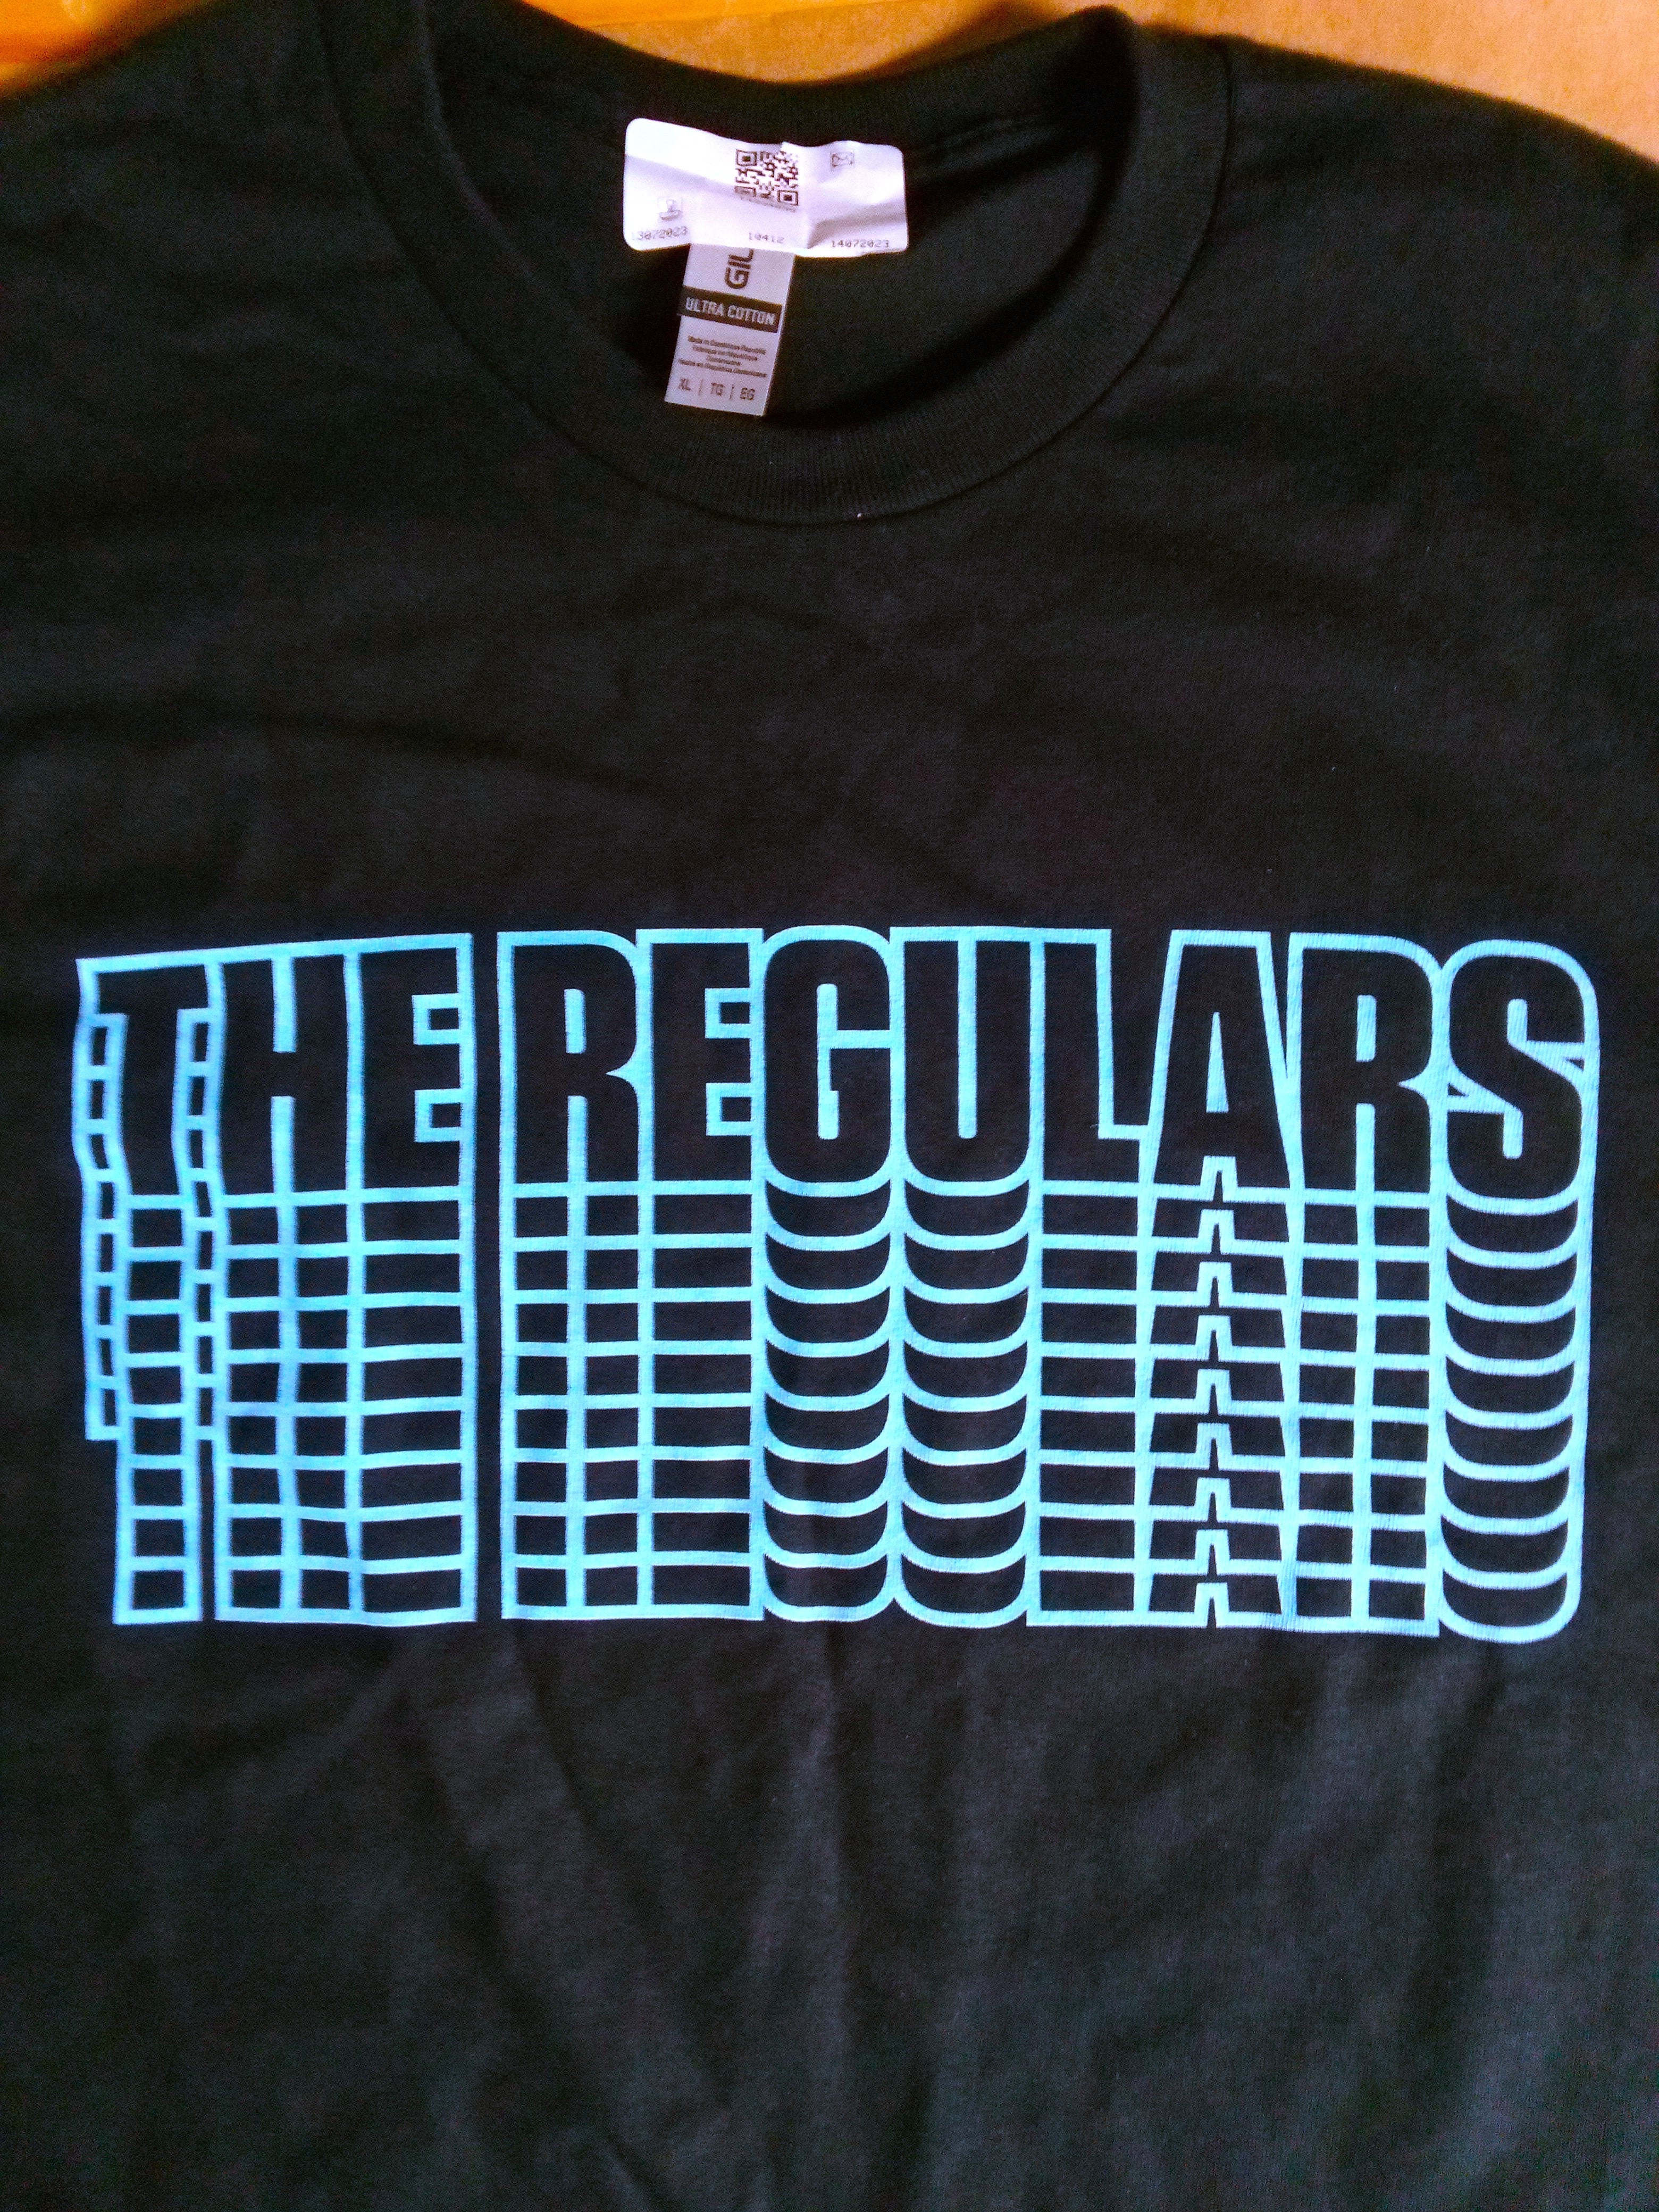 The Regulars T-Shirt - U.S. Soccer - Fan Club Merch